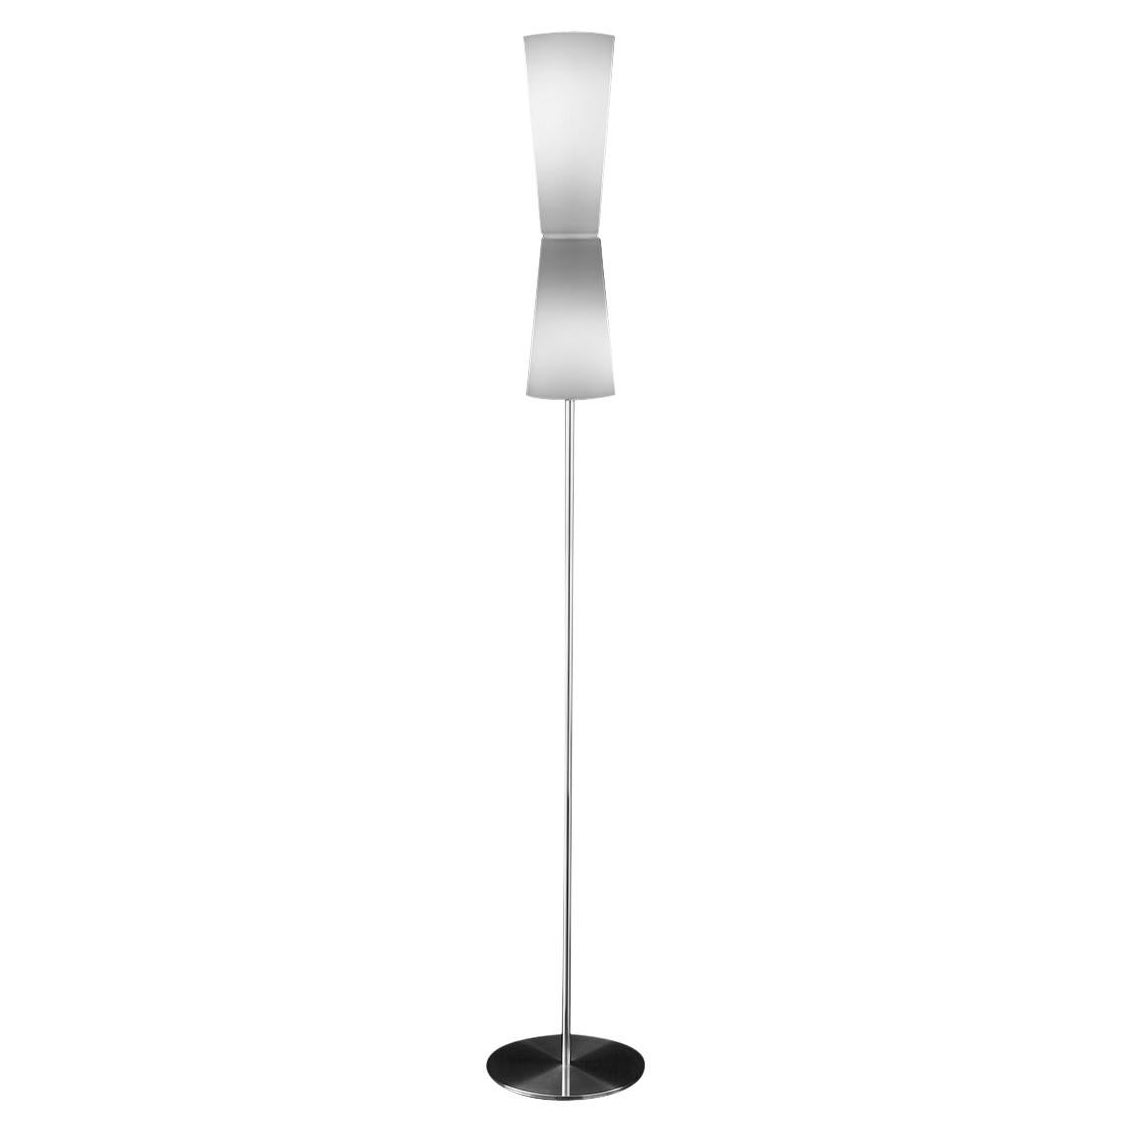 Stefano Casciani Floor Lamp 'Lu-Lu' Murano Glass and Metal by Oluce For Sale